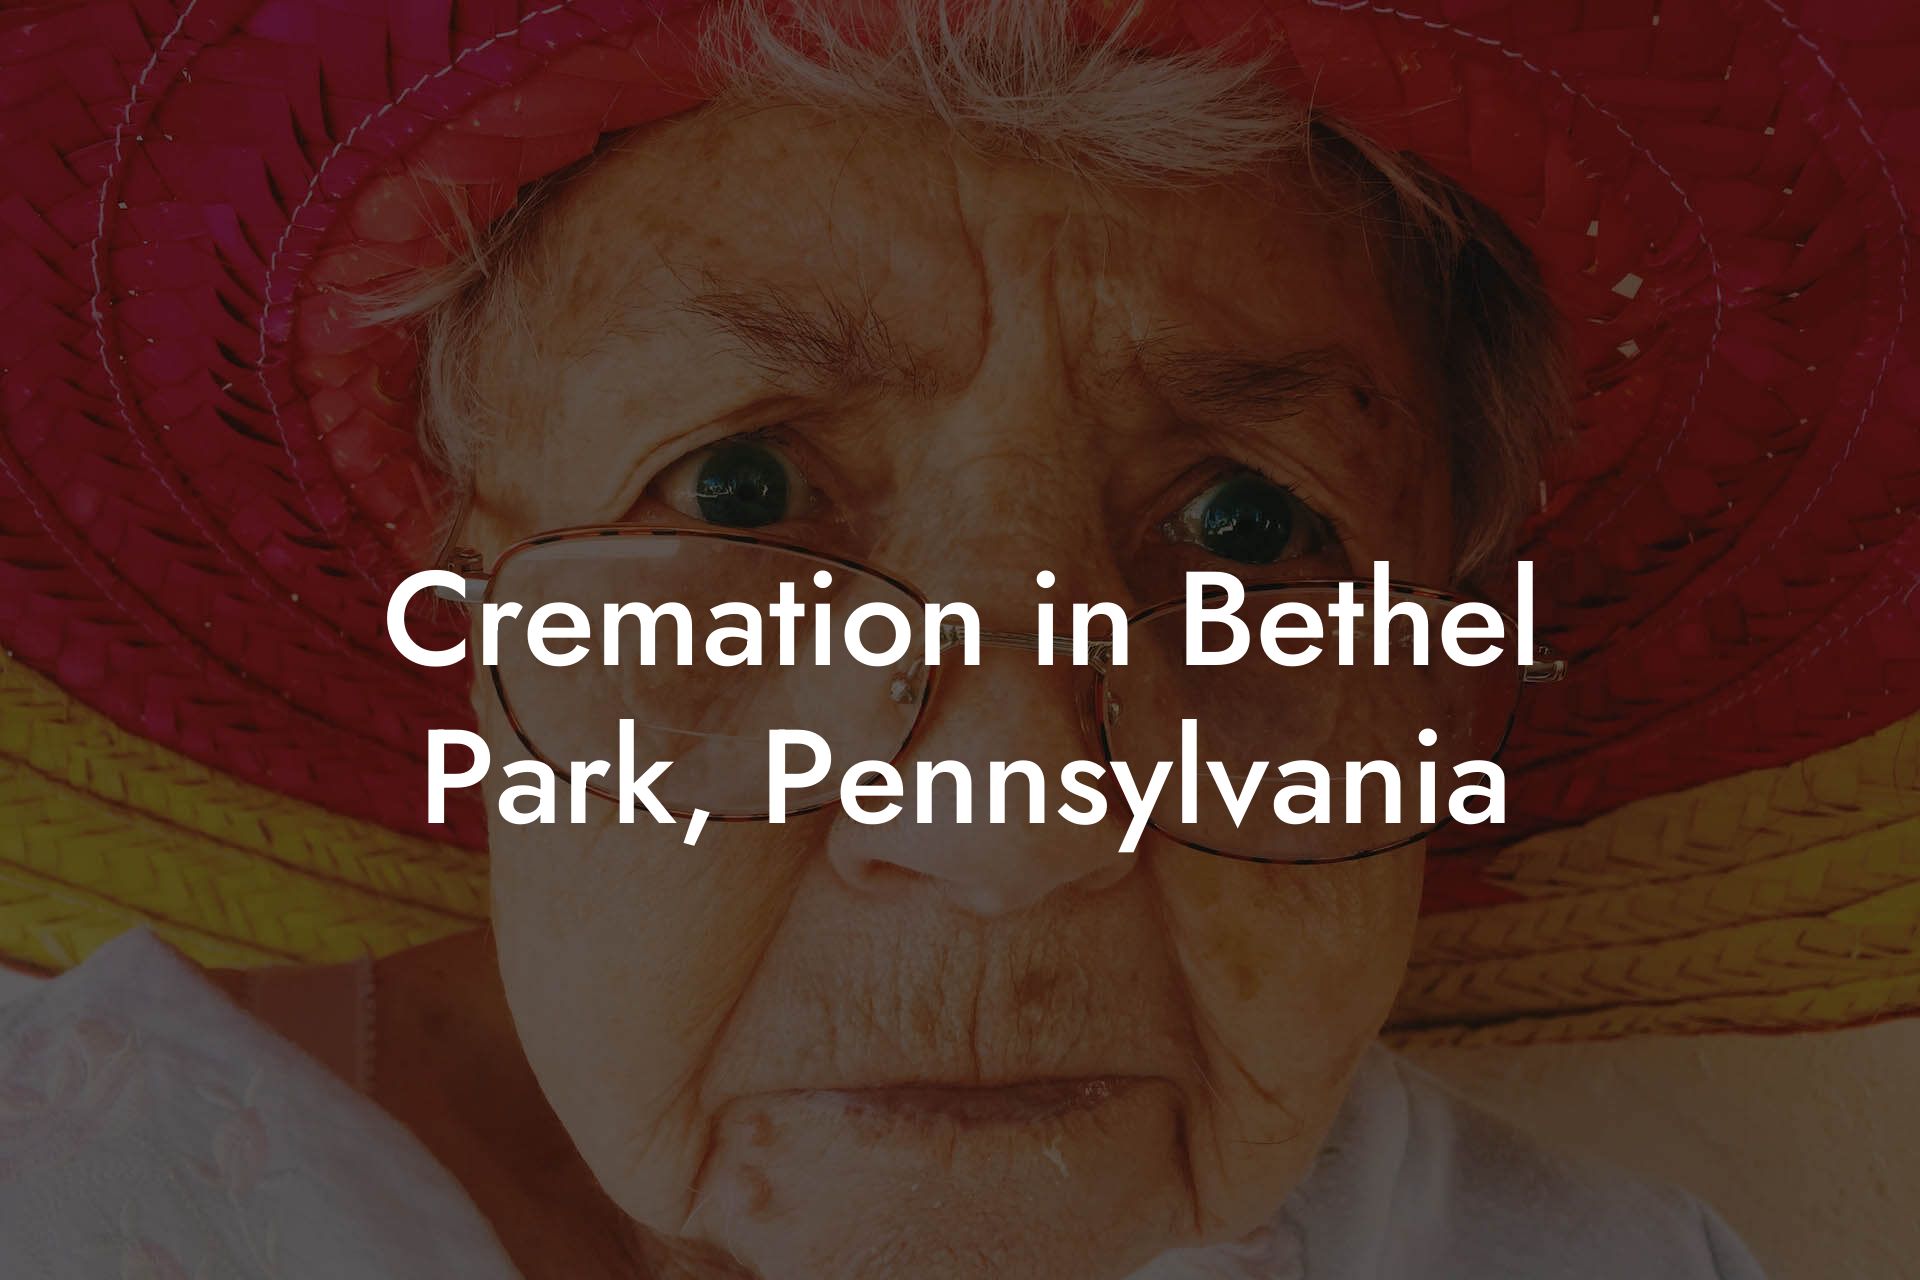 Cremation in Bethel Park, Pennsylvania